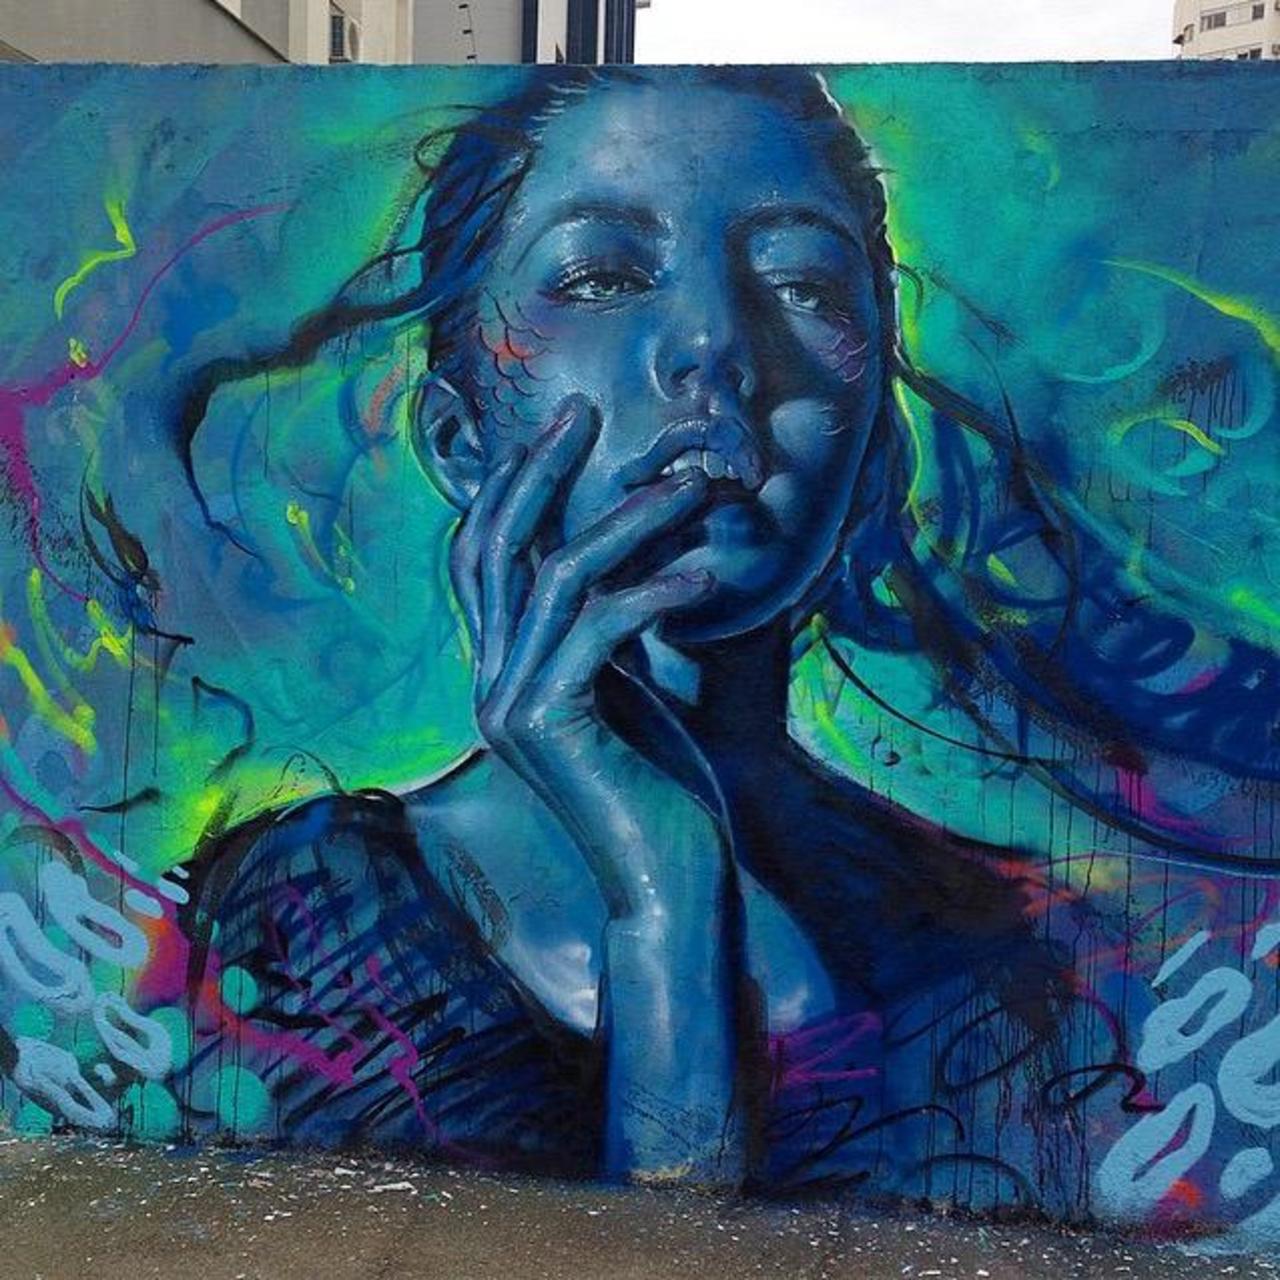 RT @Trxll_Squad: Thiago Valdi new Street Art piece titled 'Day Dreamer'

#art #mural #graffiti #streetart http://t.co/KUWdsJwQH7